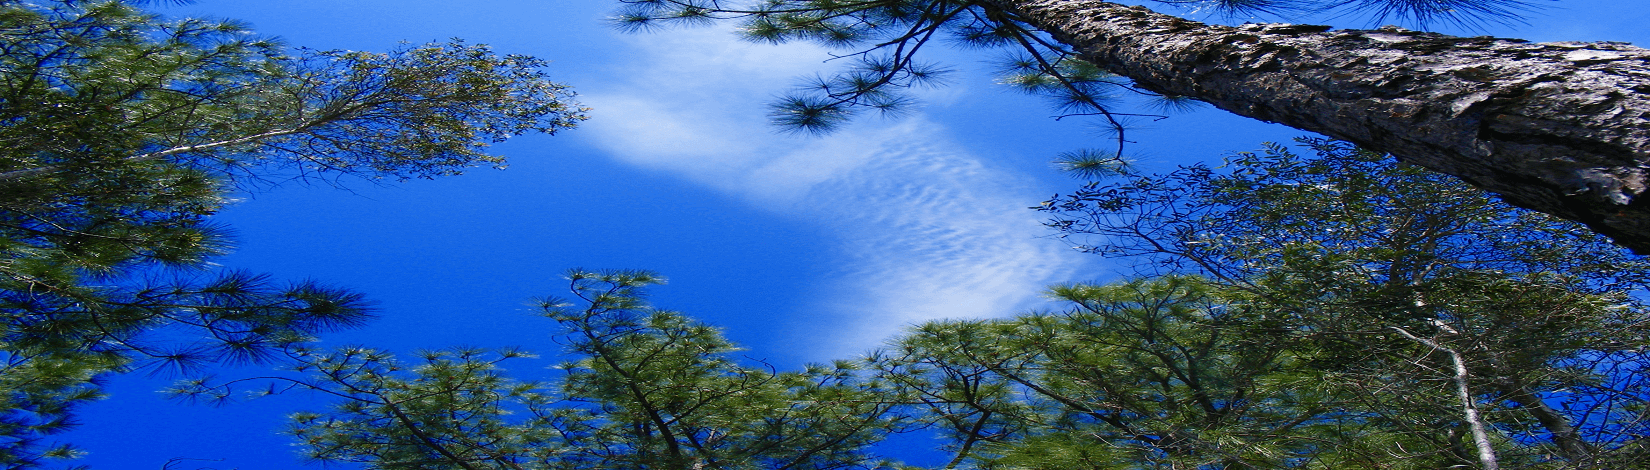 florida pines against skyline